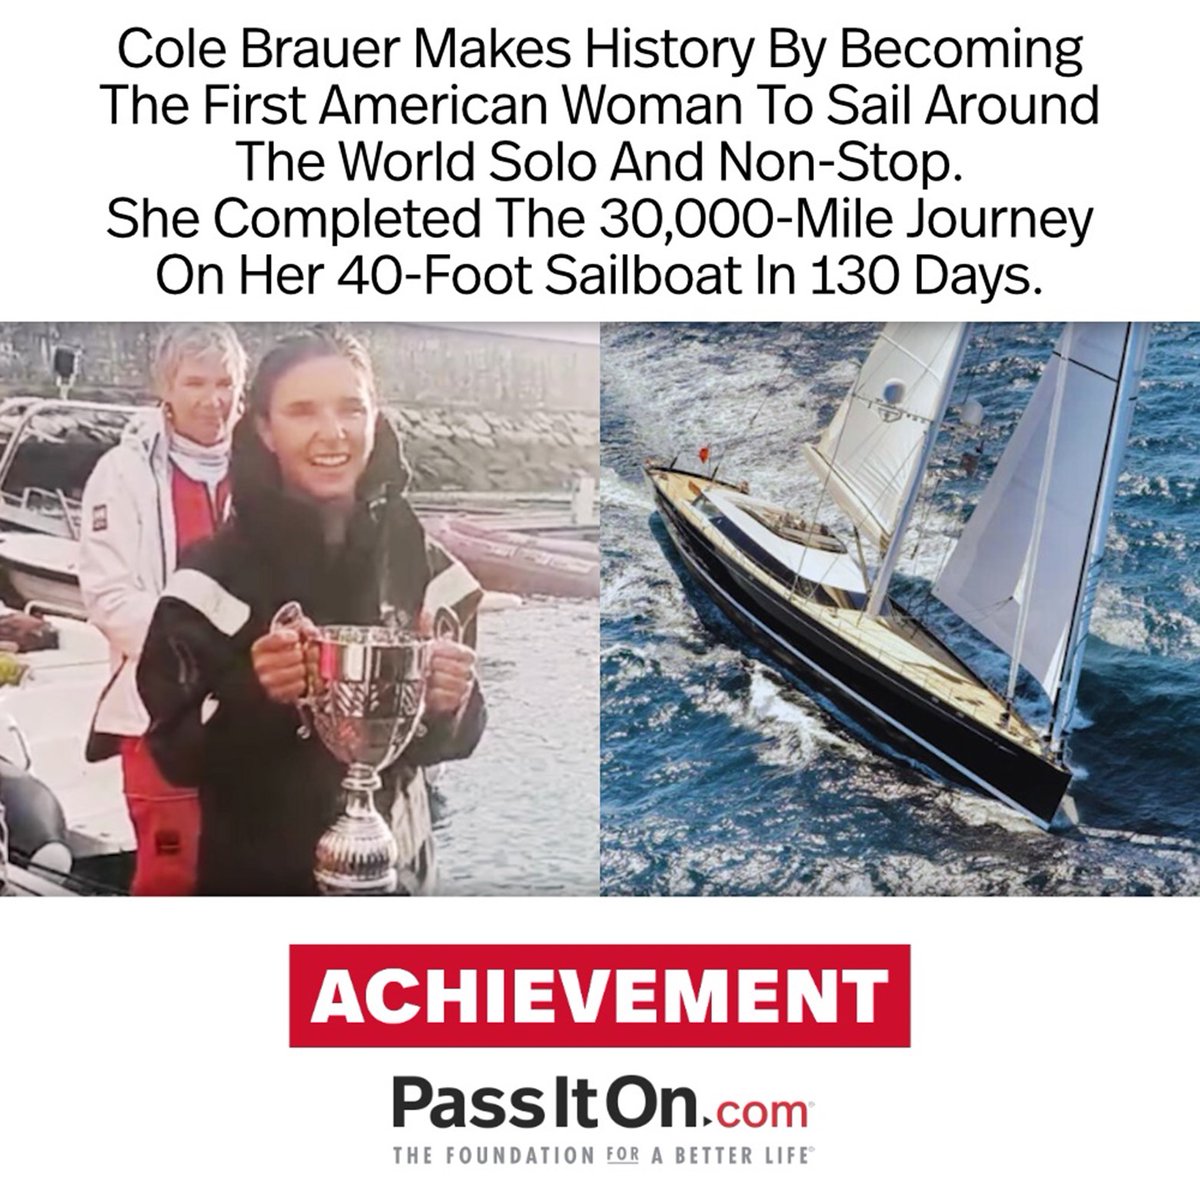 Achievement > PassItOn . . . #achievement #passiton #achieve #sailing #history #inspiration #motivation #inspirationalquotes #values #valuesmatter